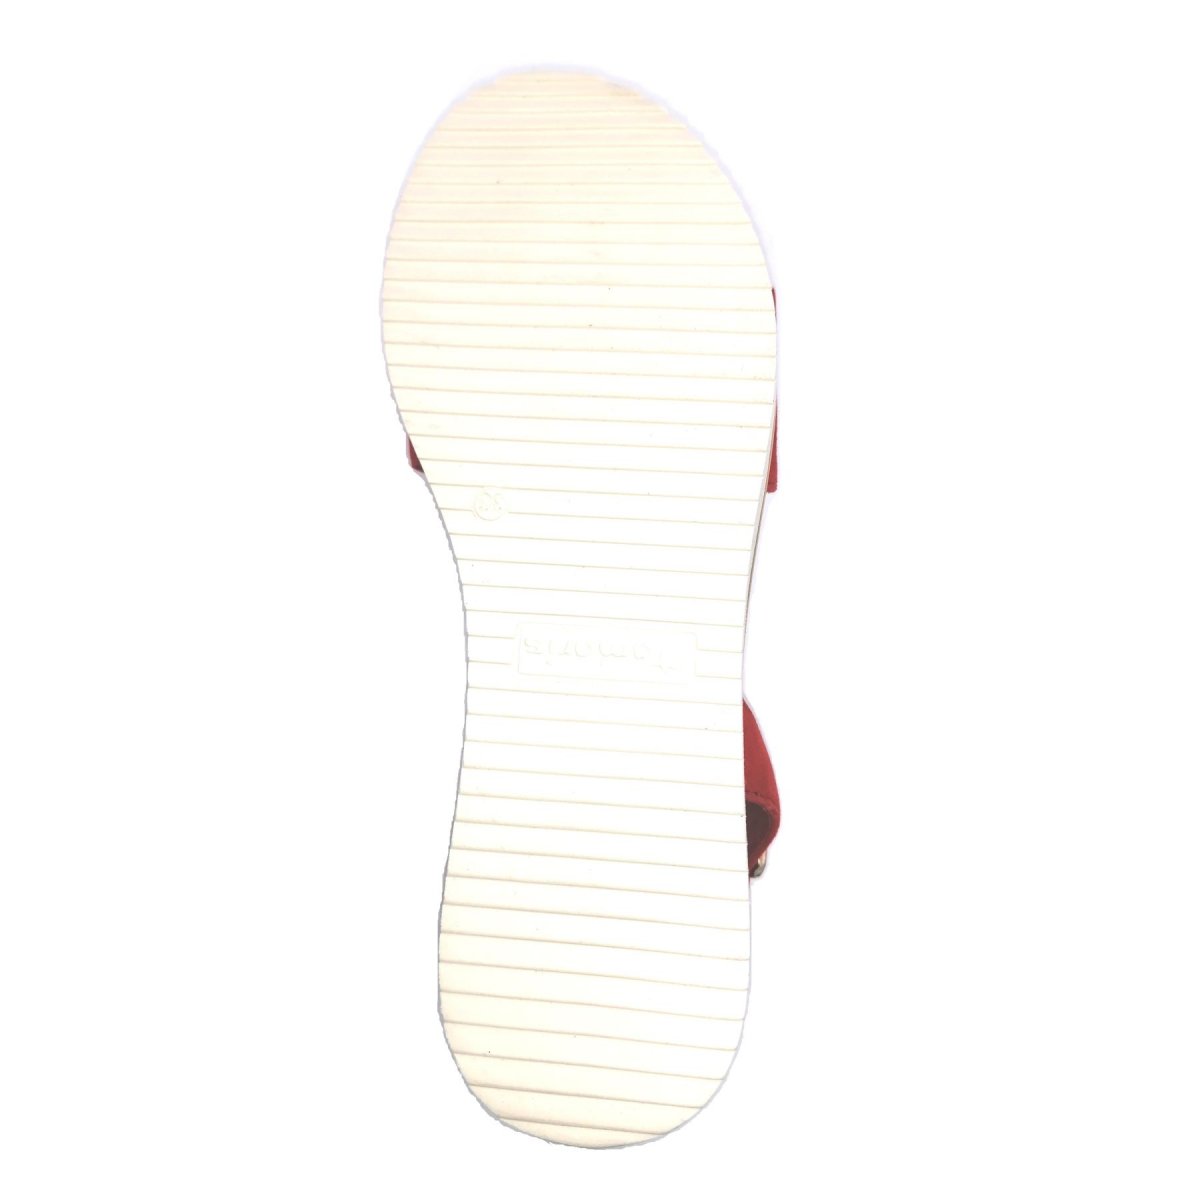 detail Dámské kožené sandály Tamaris 28224-30 533 červená